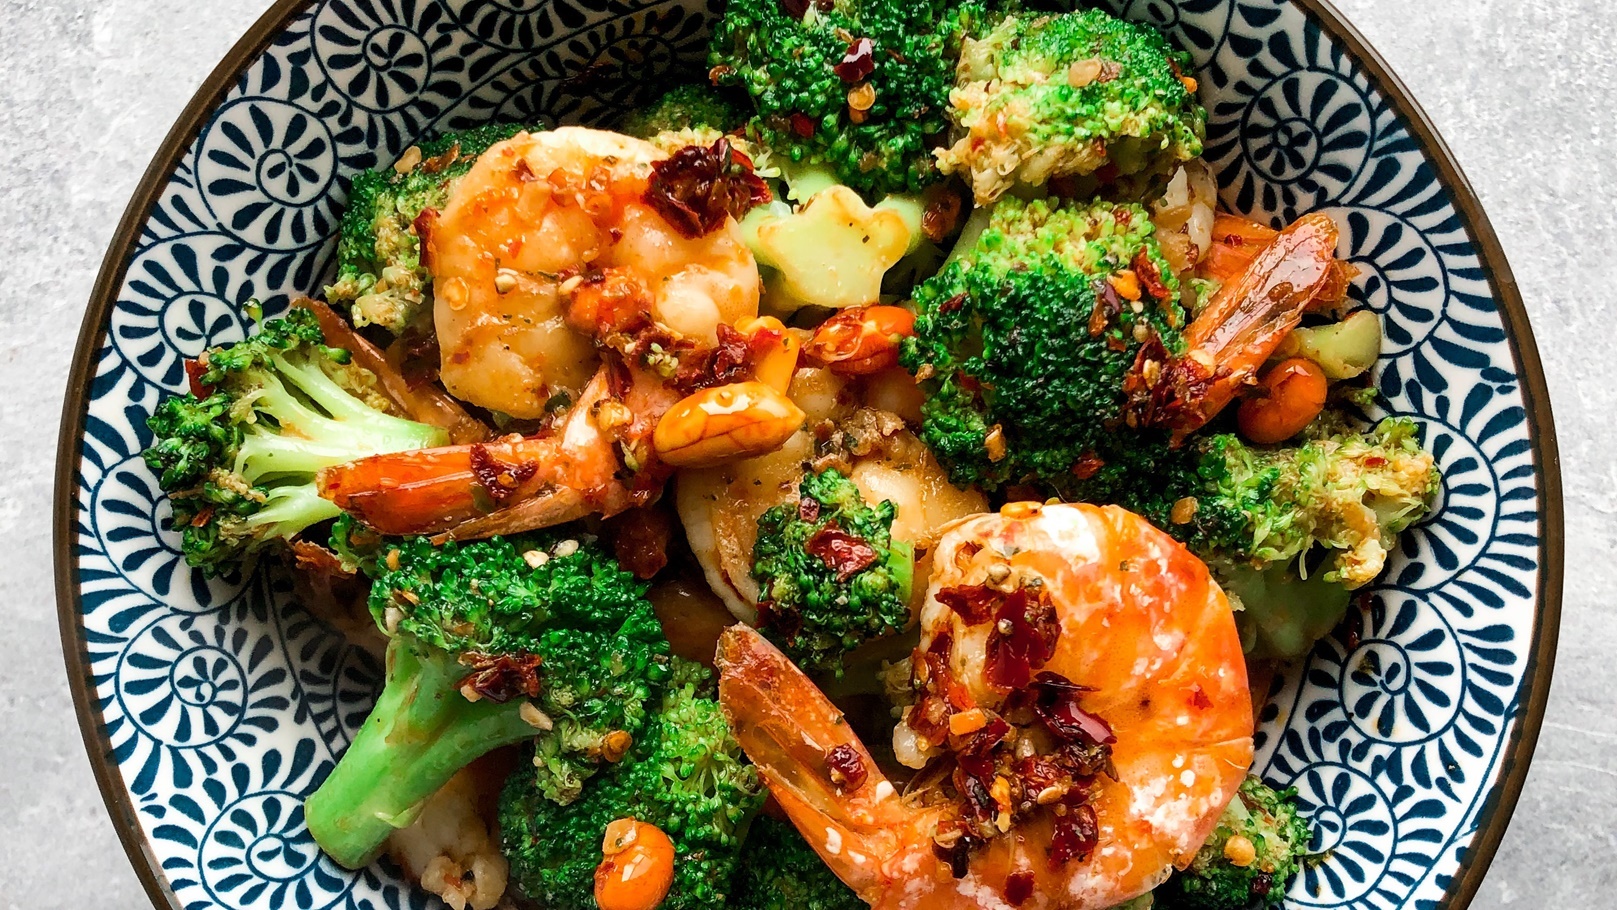 spicy-garlic-shrimp-and-broccoli-stir-fry-2021-09-13-17-57-07-utc